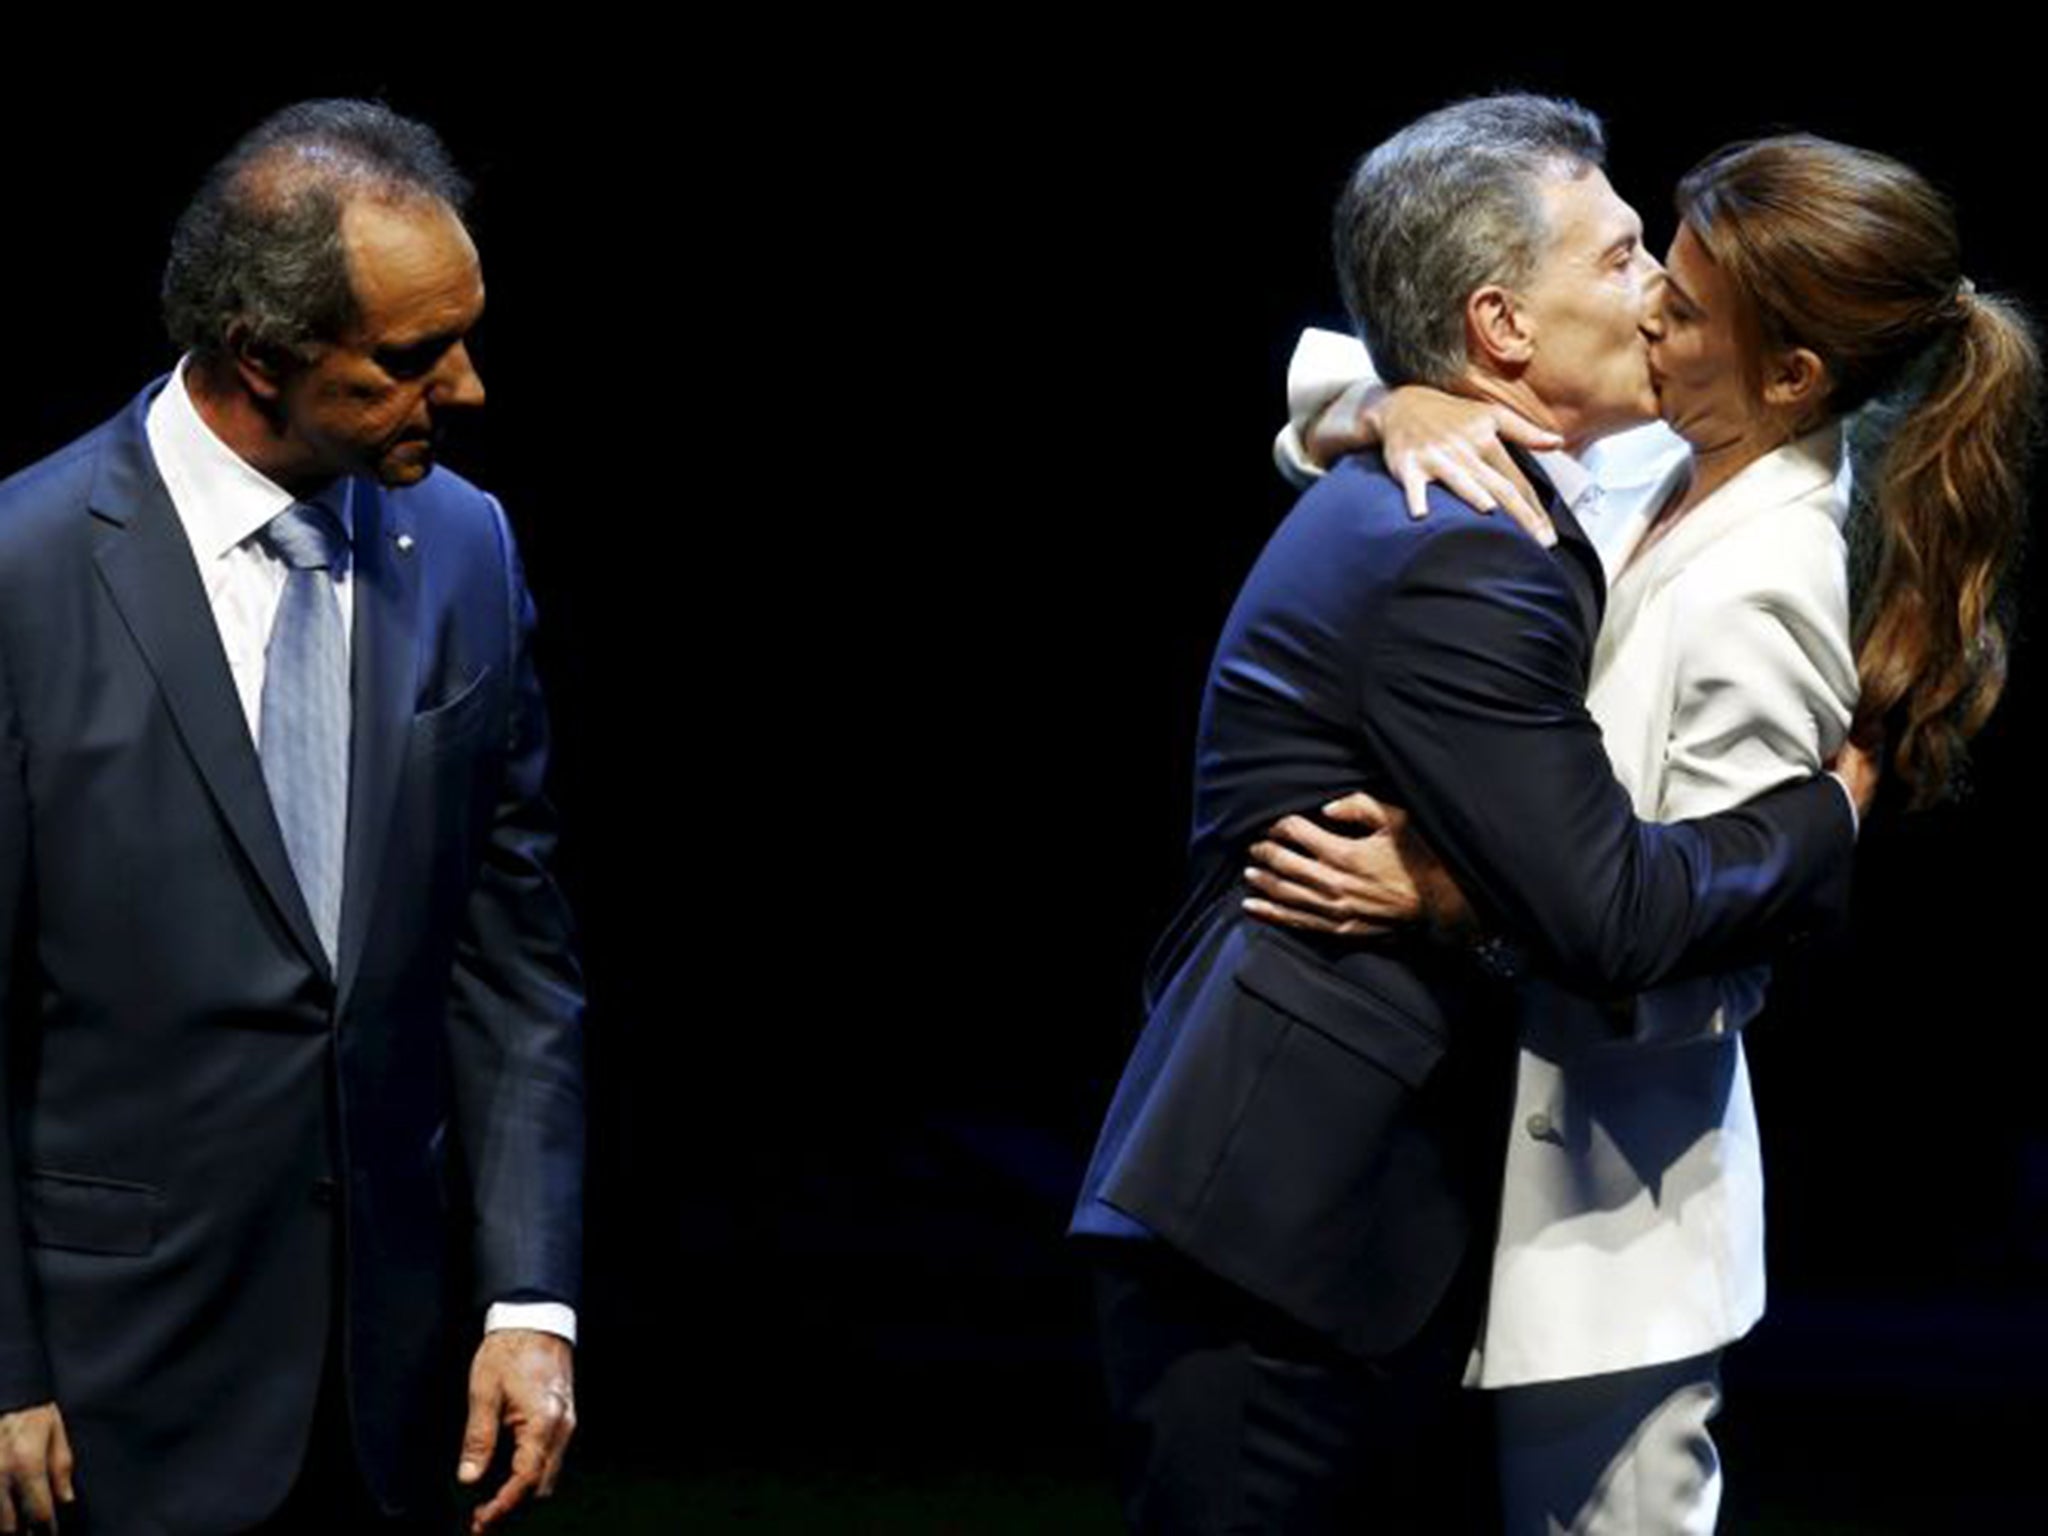 Mauricio Macri kisses his wife as Daniel Scioli looks on at the end of the TV debate